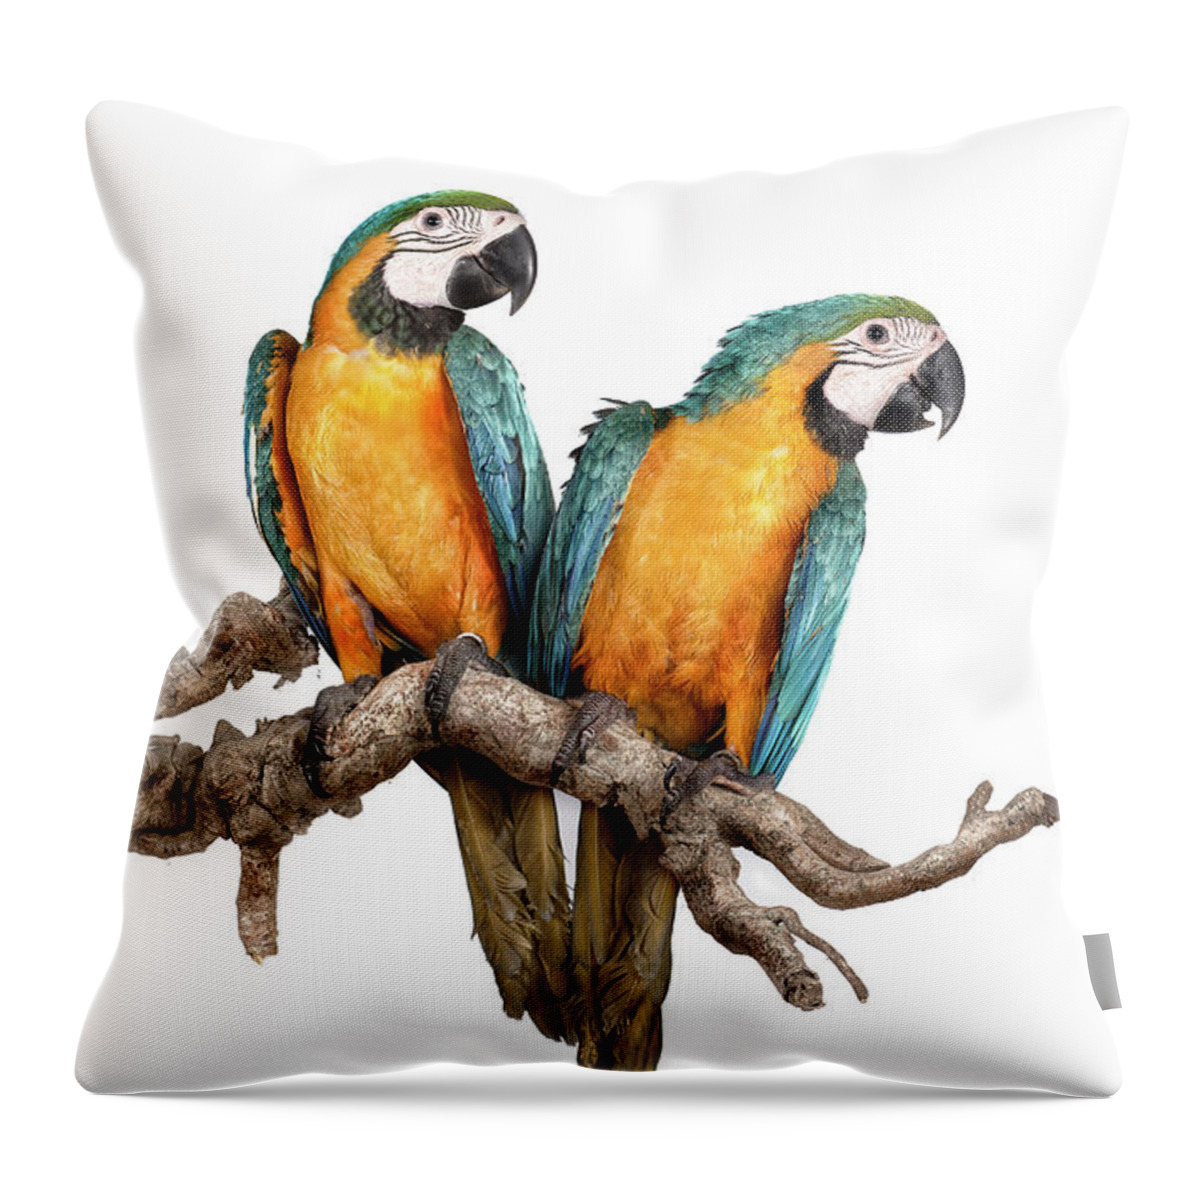 Macaw Throw Pillow featuring the photograph Guacamayos-11-120812 Copia by Silversaltphoto.j.senosiain